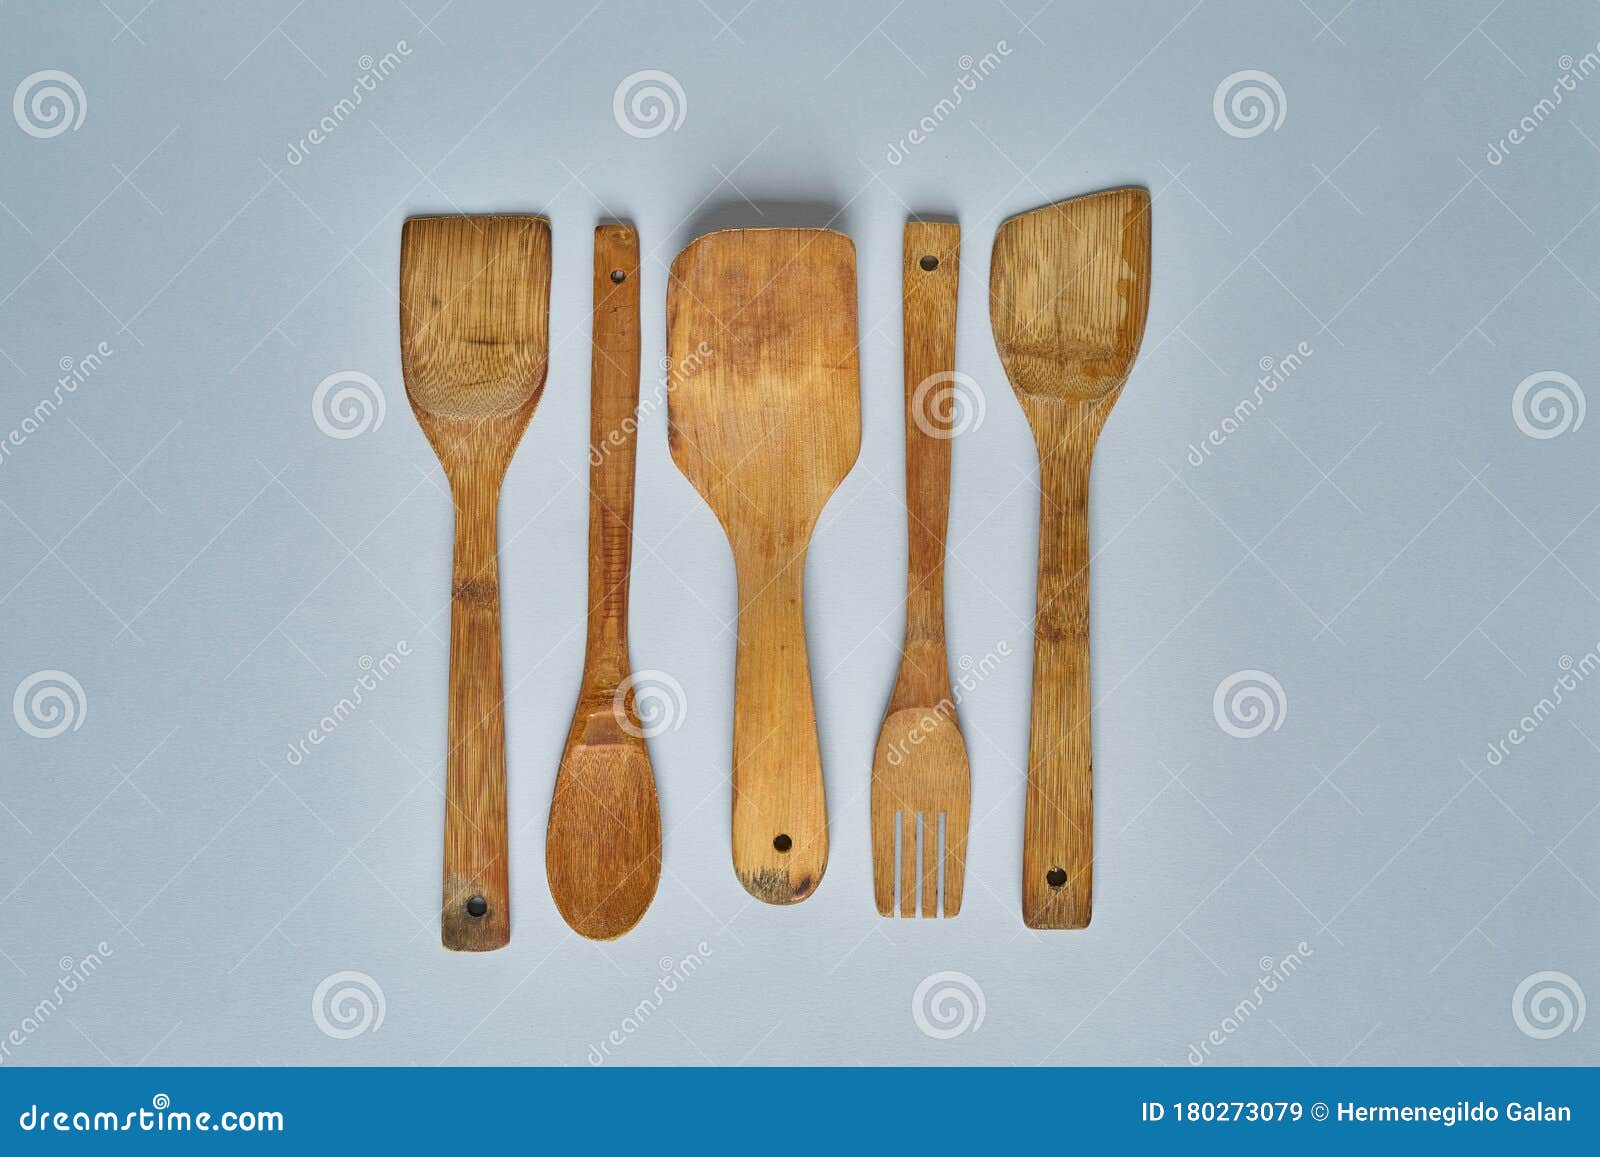 https://thumbs.dreamstime.com/z/row-assorted-old-wooden-kitchen-utensils-top-view-180273079.jpg